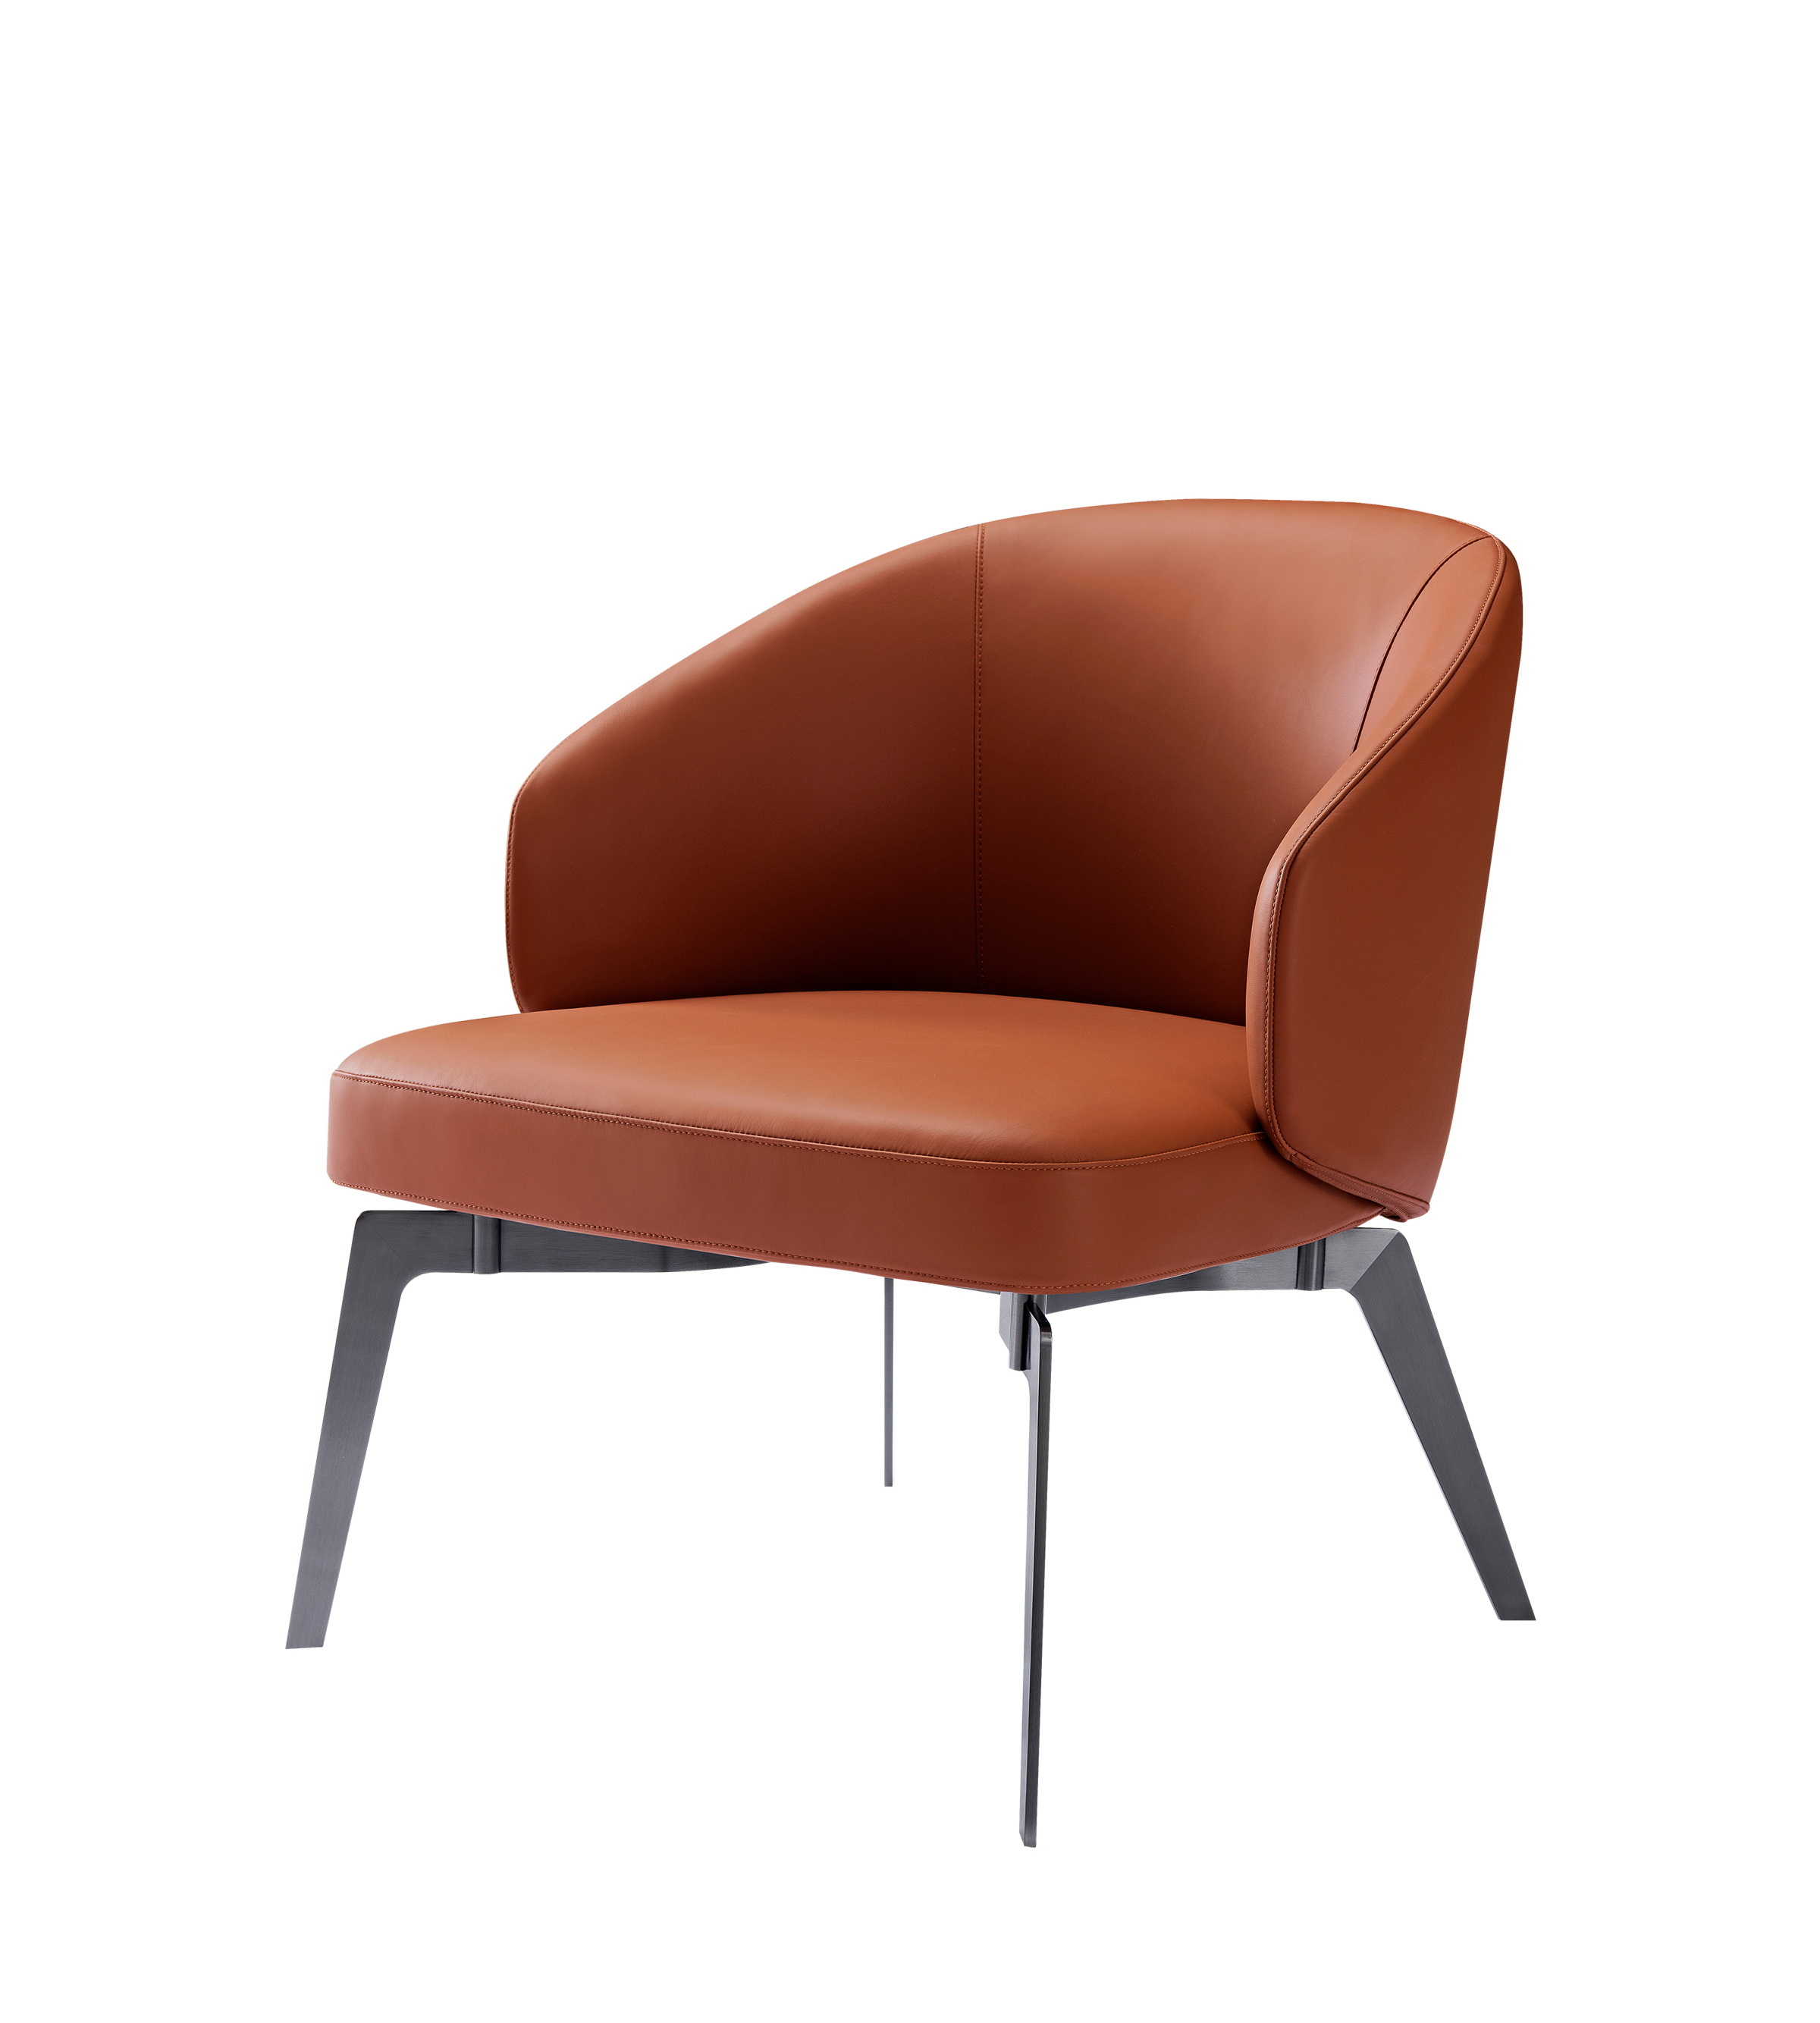 Custom-made Leisure Chair | Leisure Chair Manufacturers